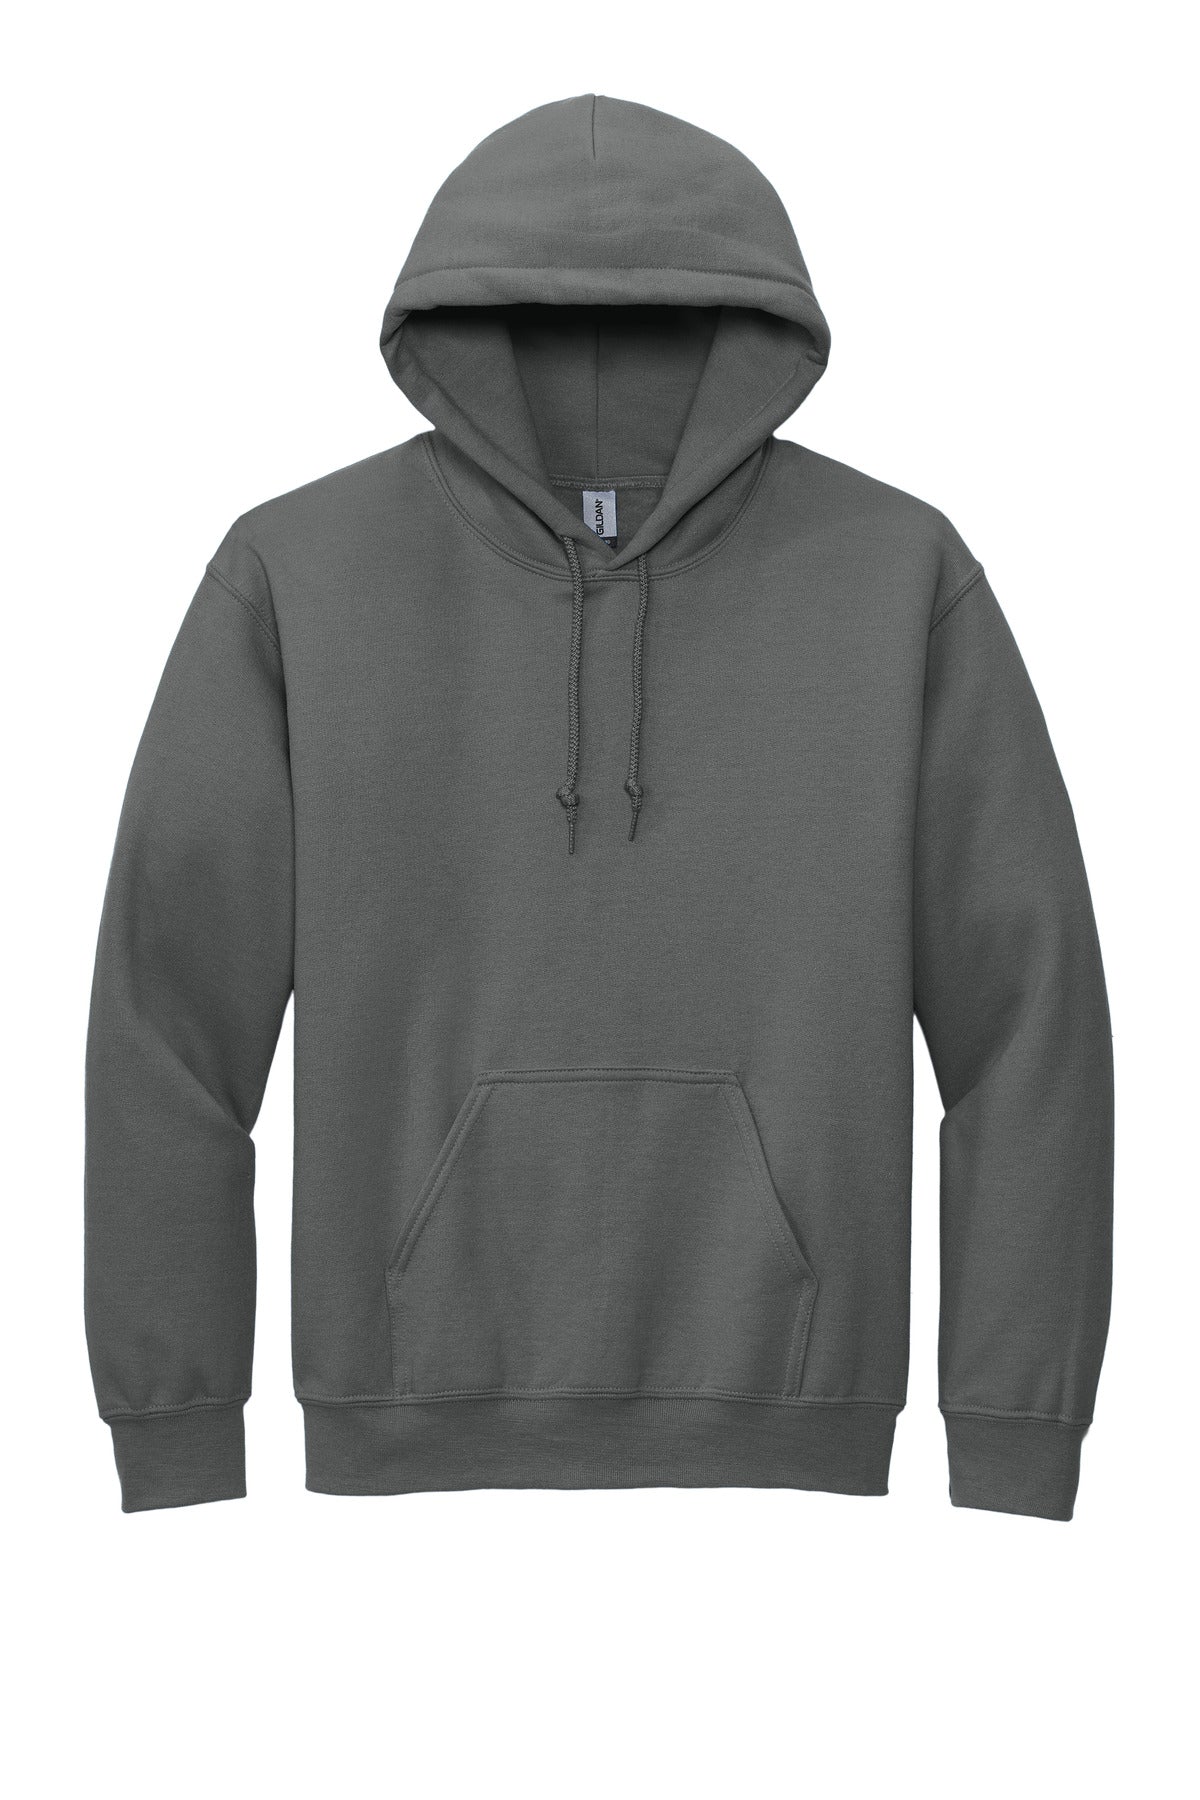 BGR - Gildan - DryBlend Pullover Hooded Sweatshirt.  12500